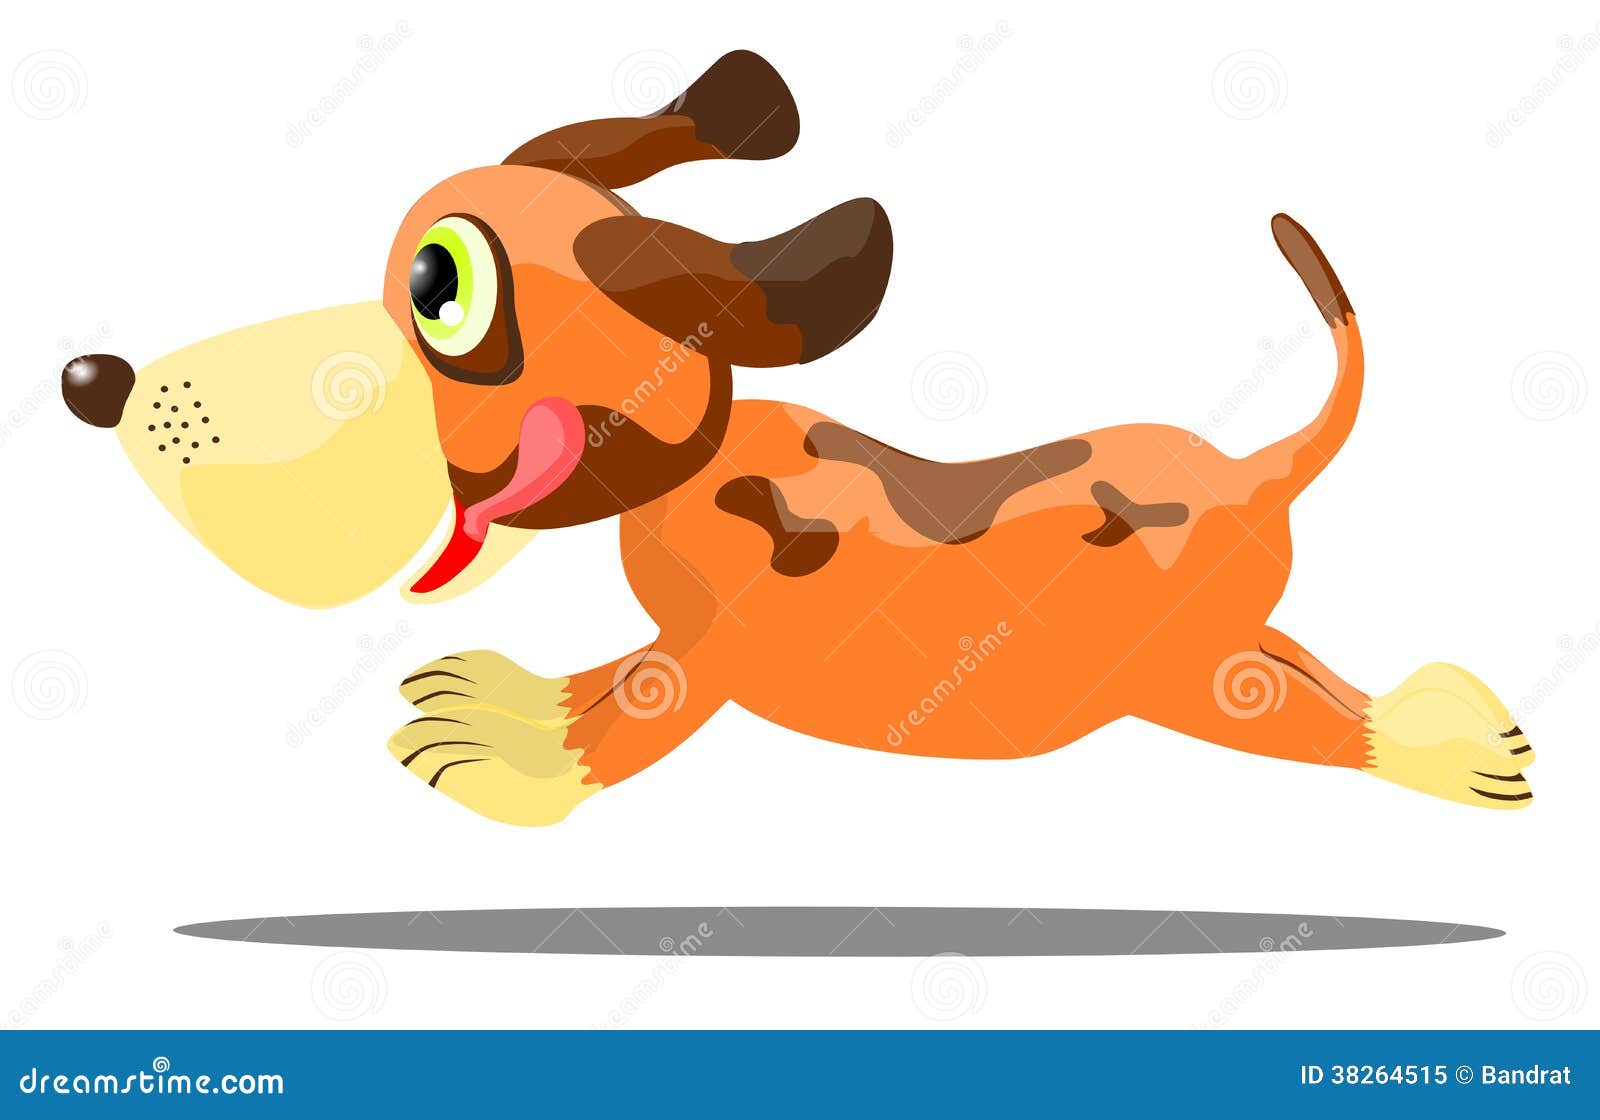 My dog can run and jump. Собака бежит сбоку. Dog for Kids на прозрачном фоне. Щенок идет для детей на прозрачном фоне. Собака ходит на прозрачном фоне.